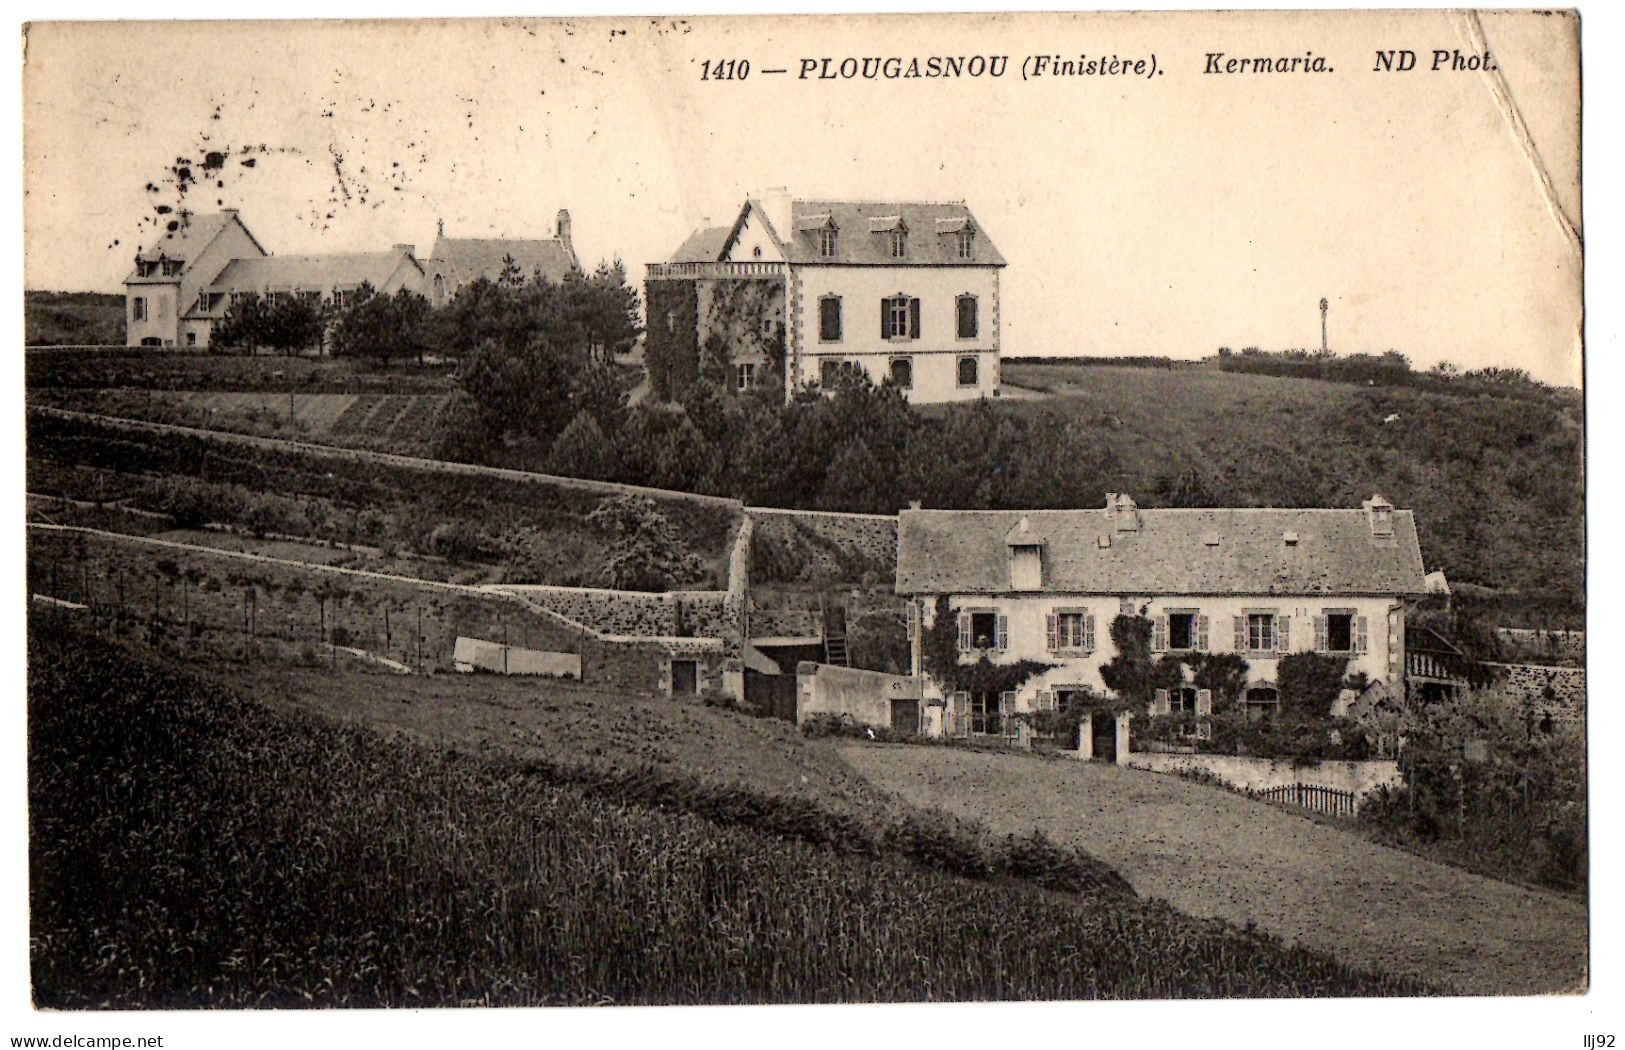 CPA 29 - PLOUGASNOU (Finistère) - 1410. KERMARIA - ND Phot - Plougasnou